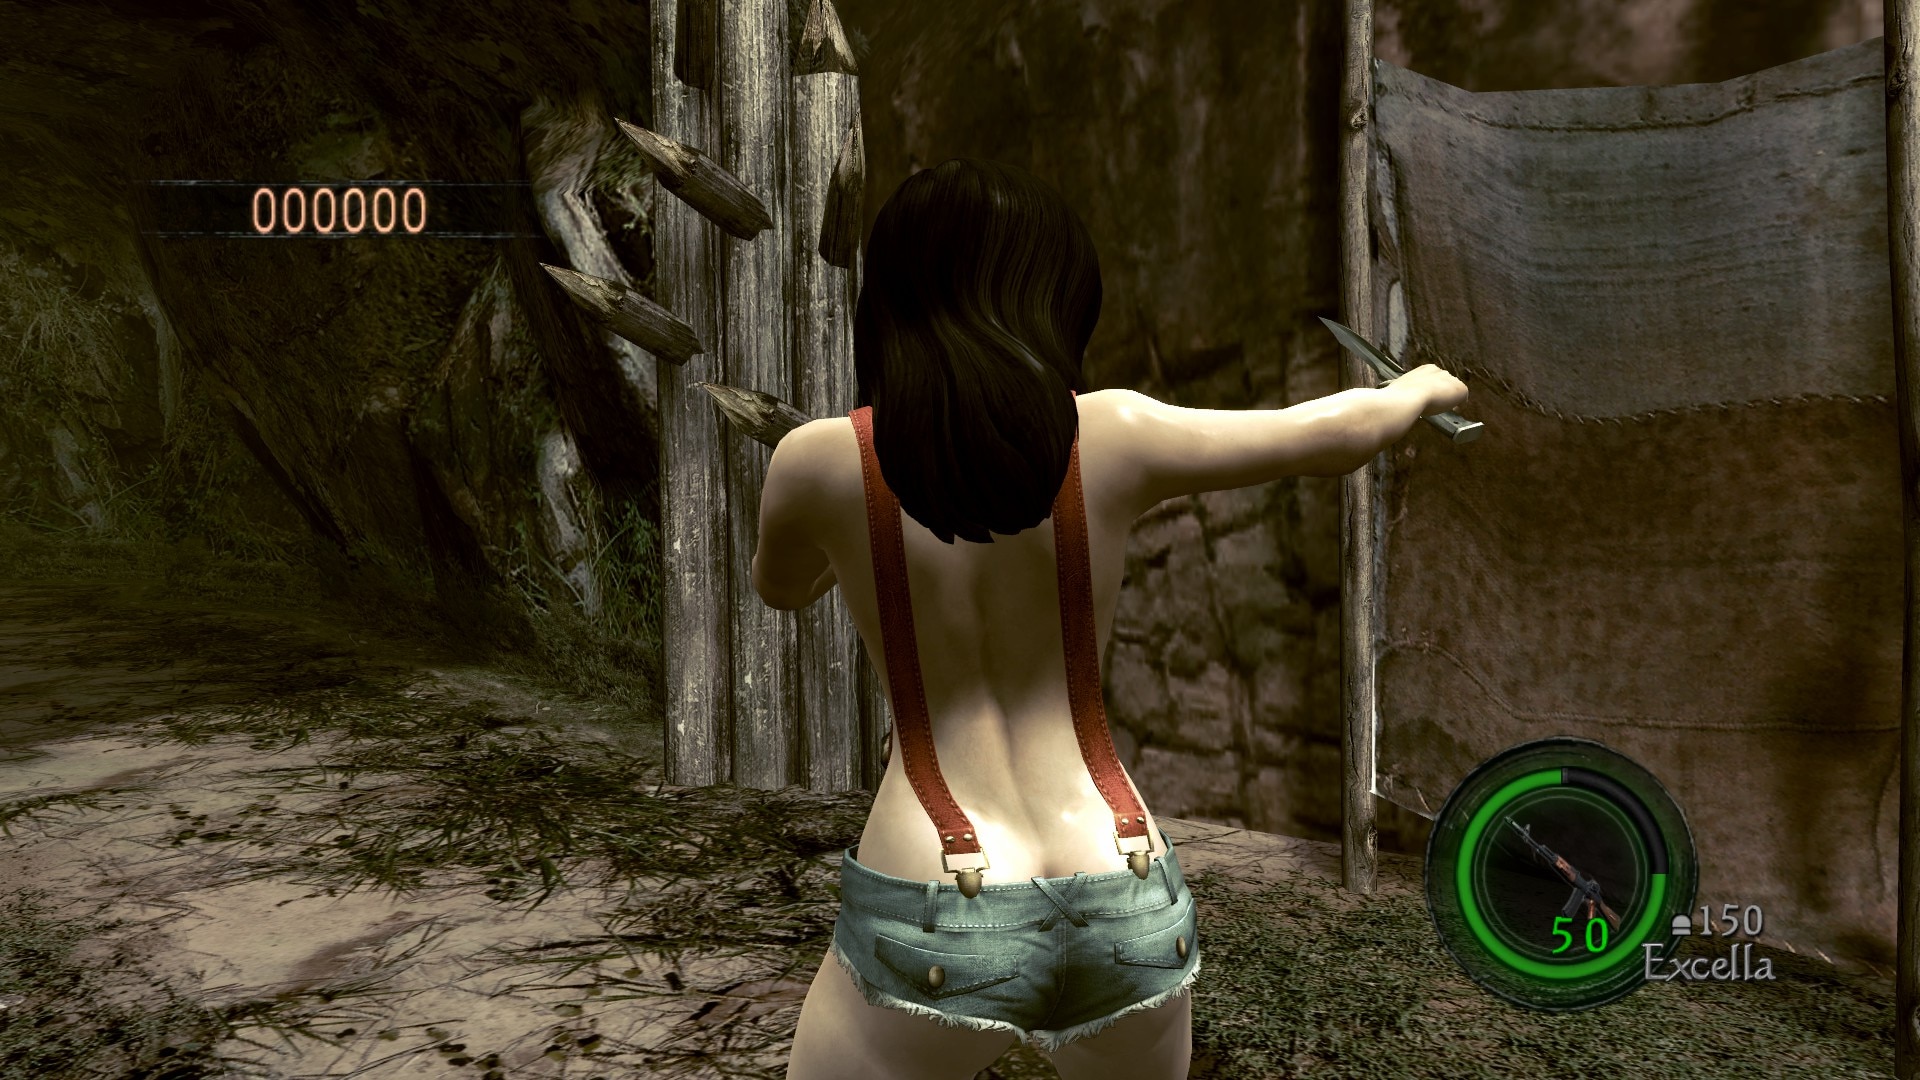 Ada Wong(RE2 Dress) Resident Evil 4 UHD by xKamillox on DeviantArt